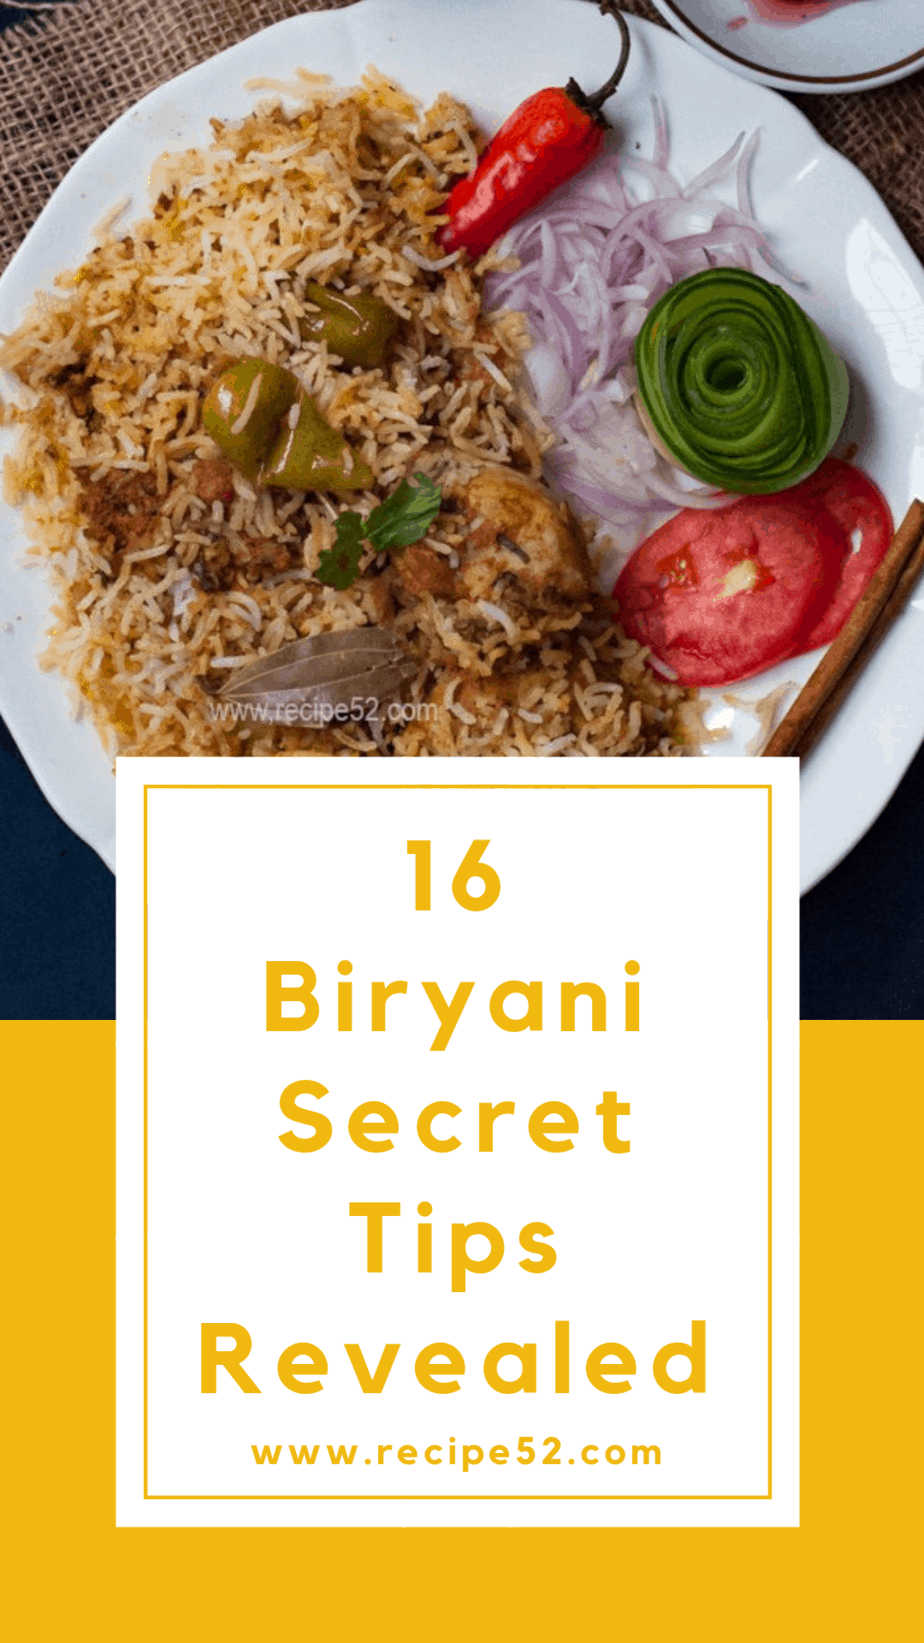 16 Best Biryani Secret Tips Revealed - Recipe52.com